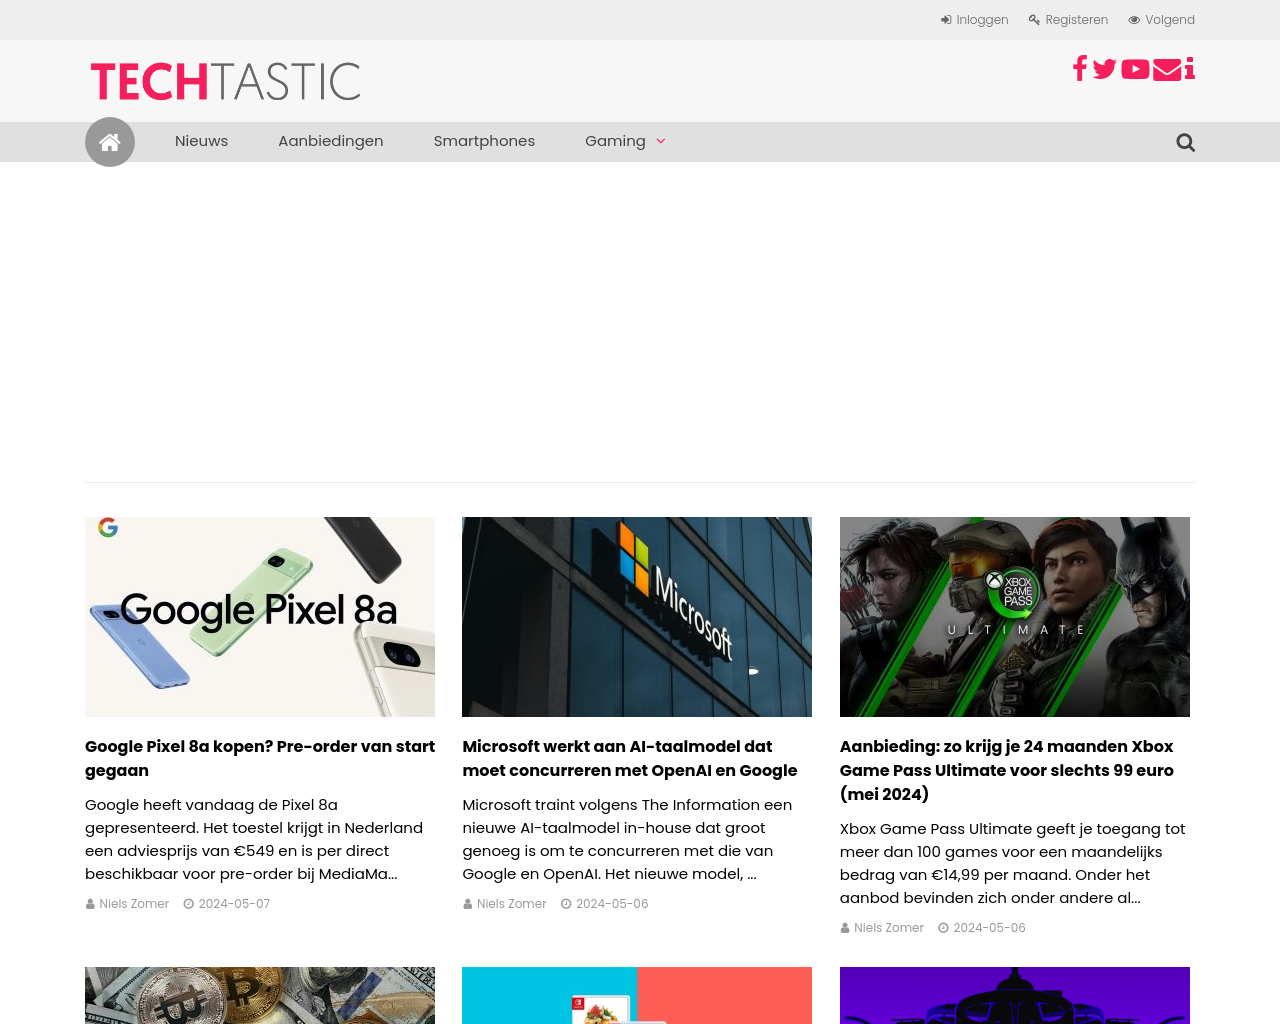 techtastic.nl